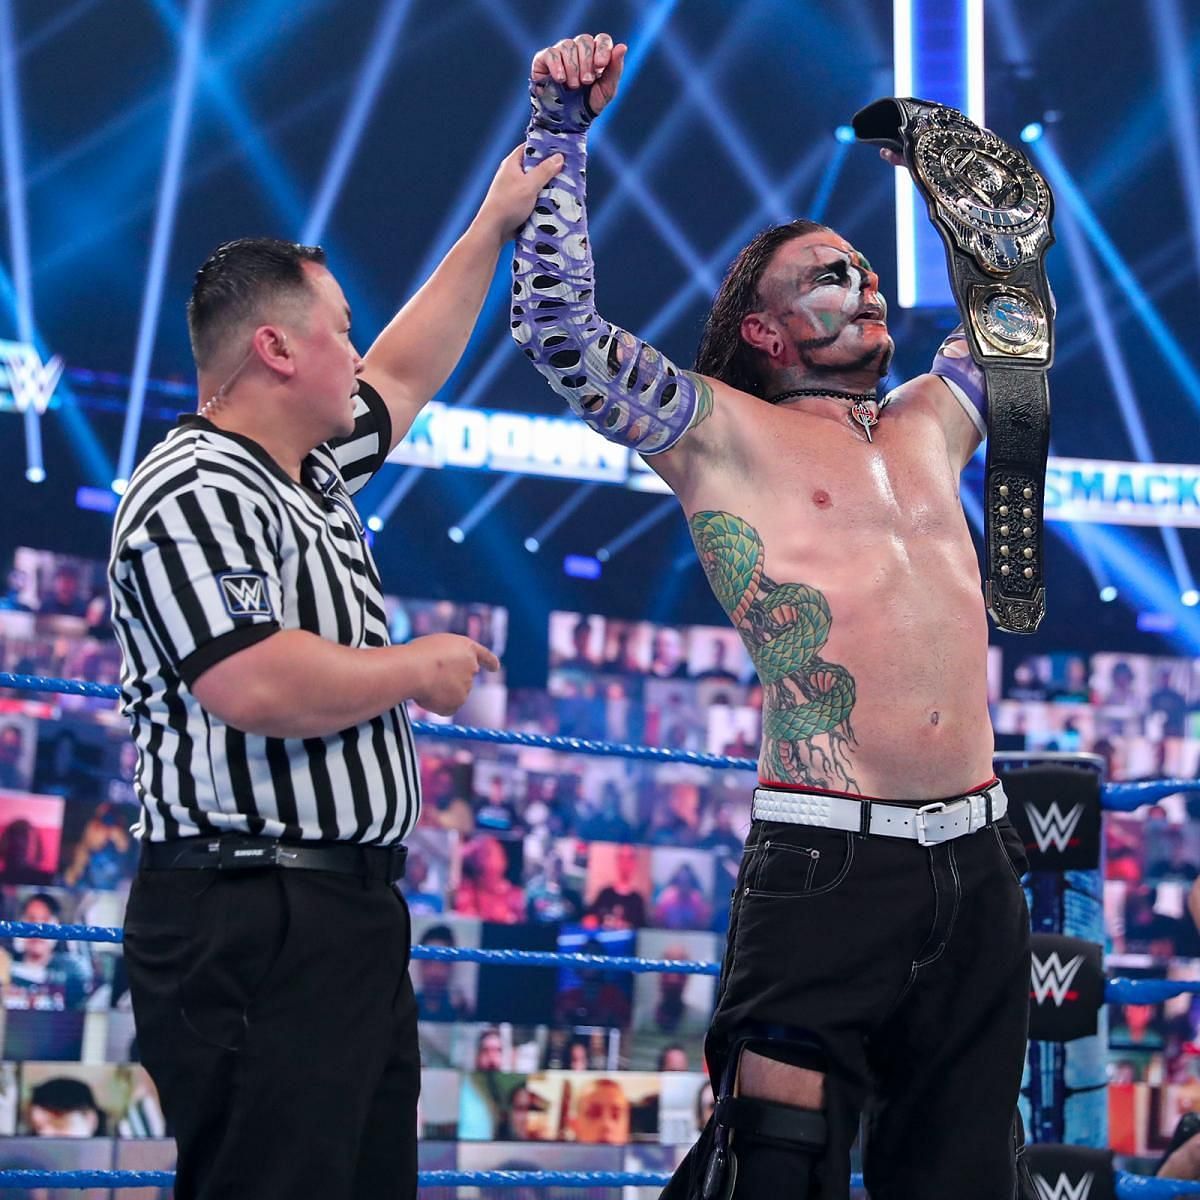 Jeff Hardy won the IC Championship two days before SummerSlam 2020